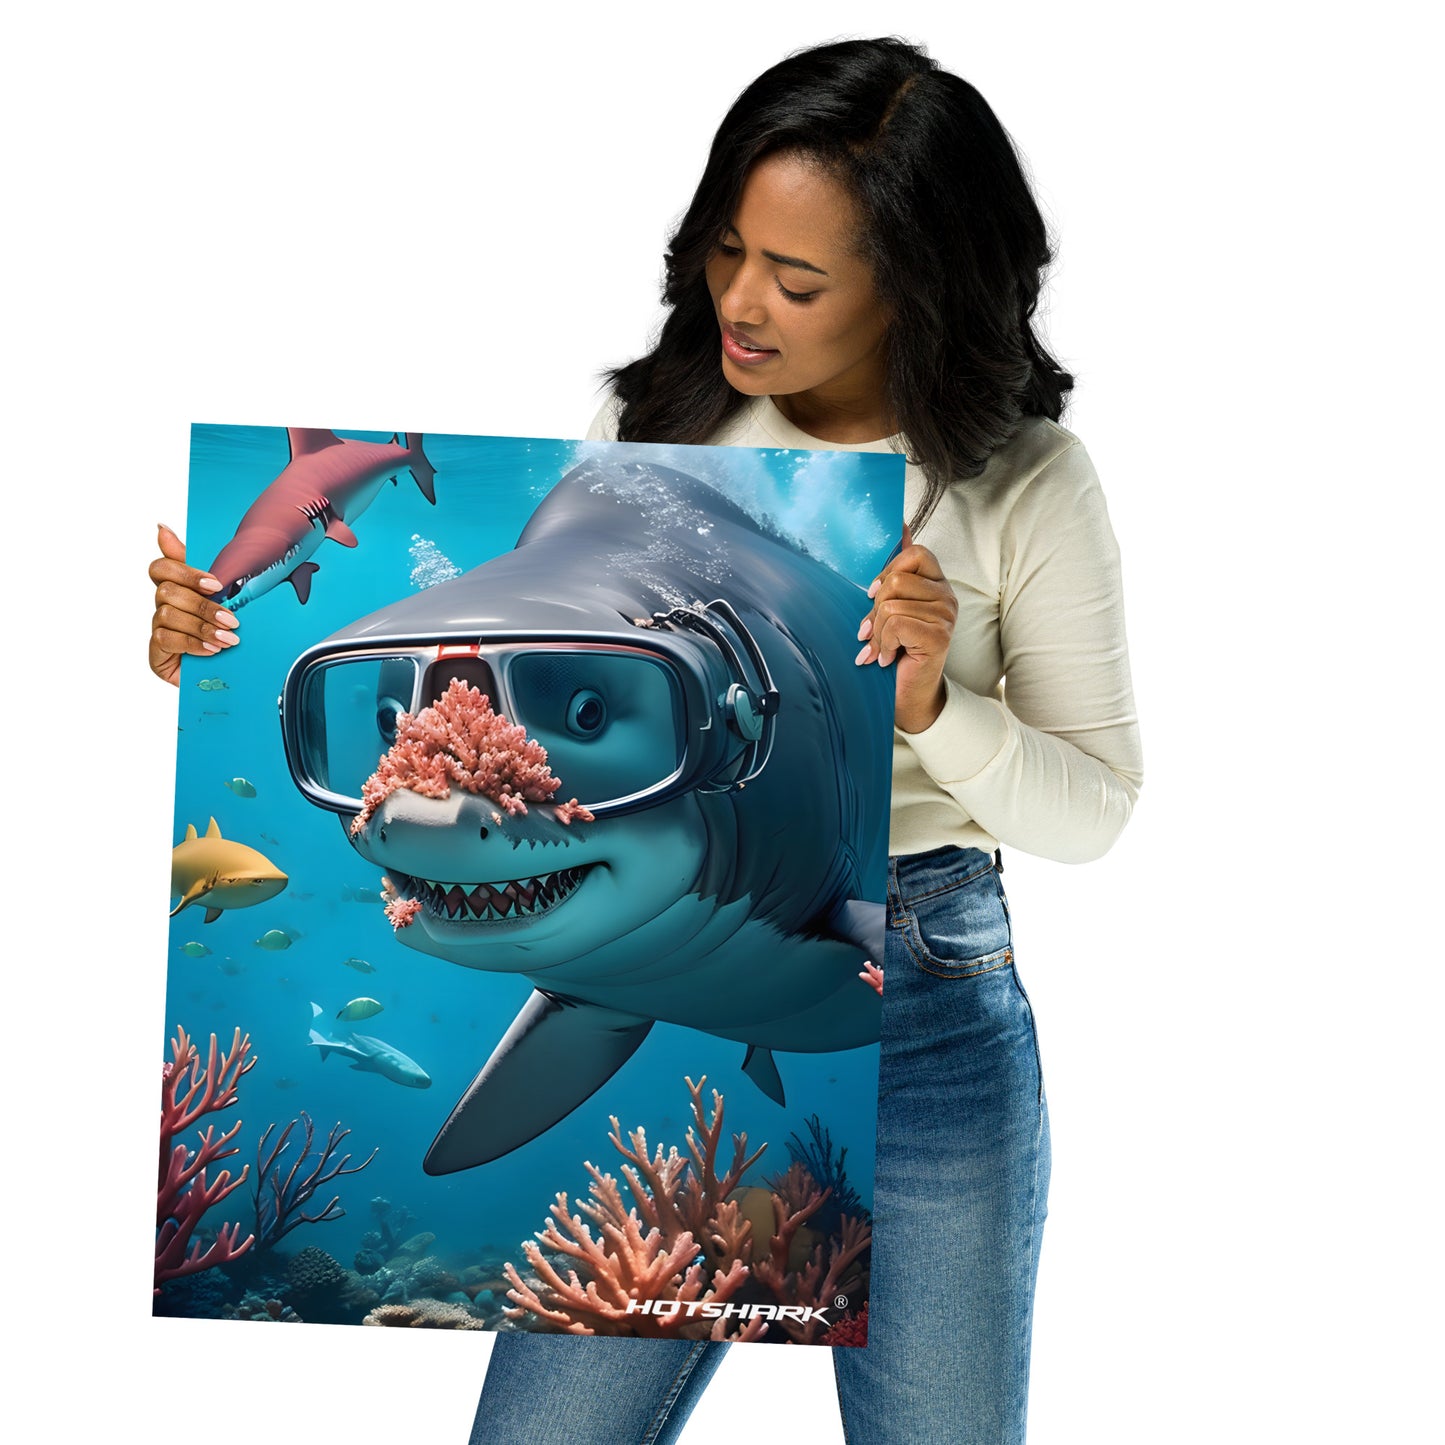 Diver3 Shark - Poster